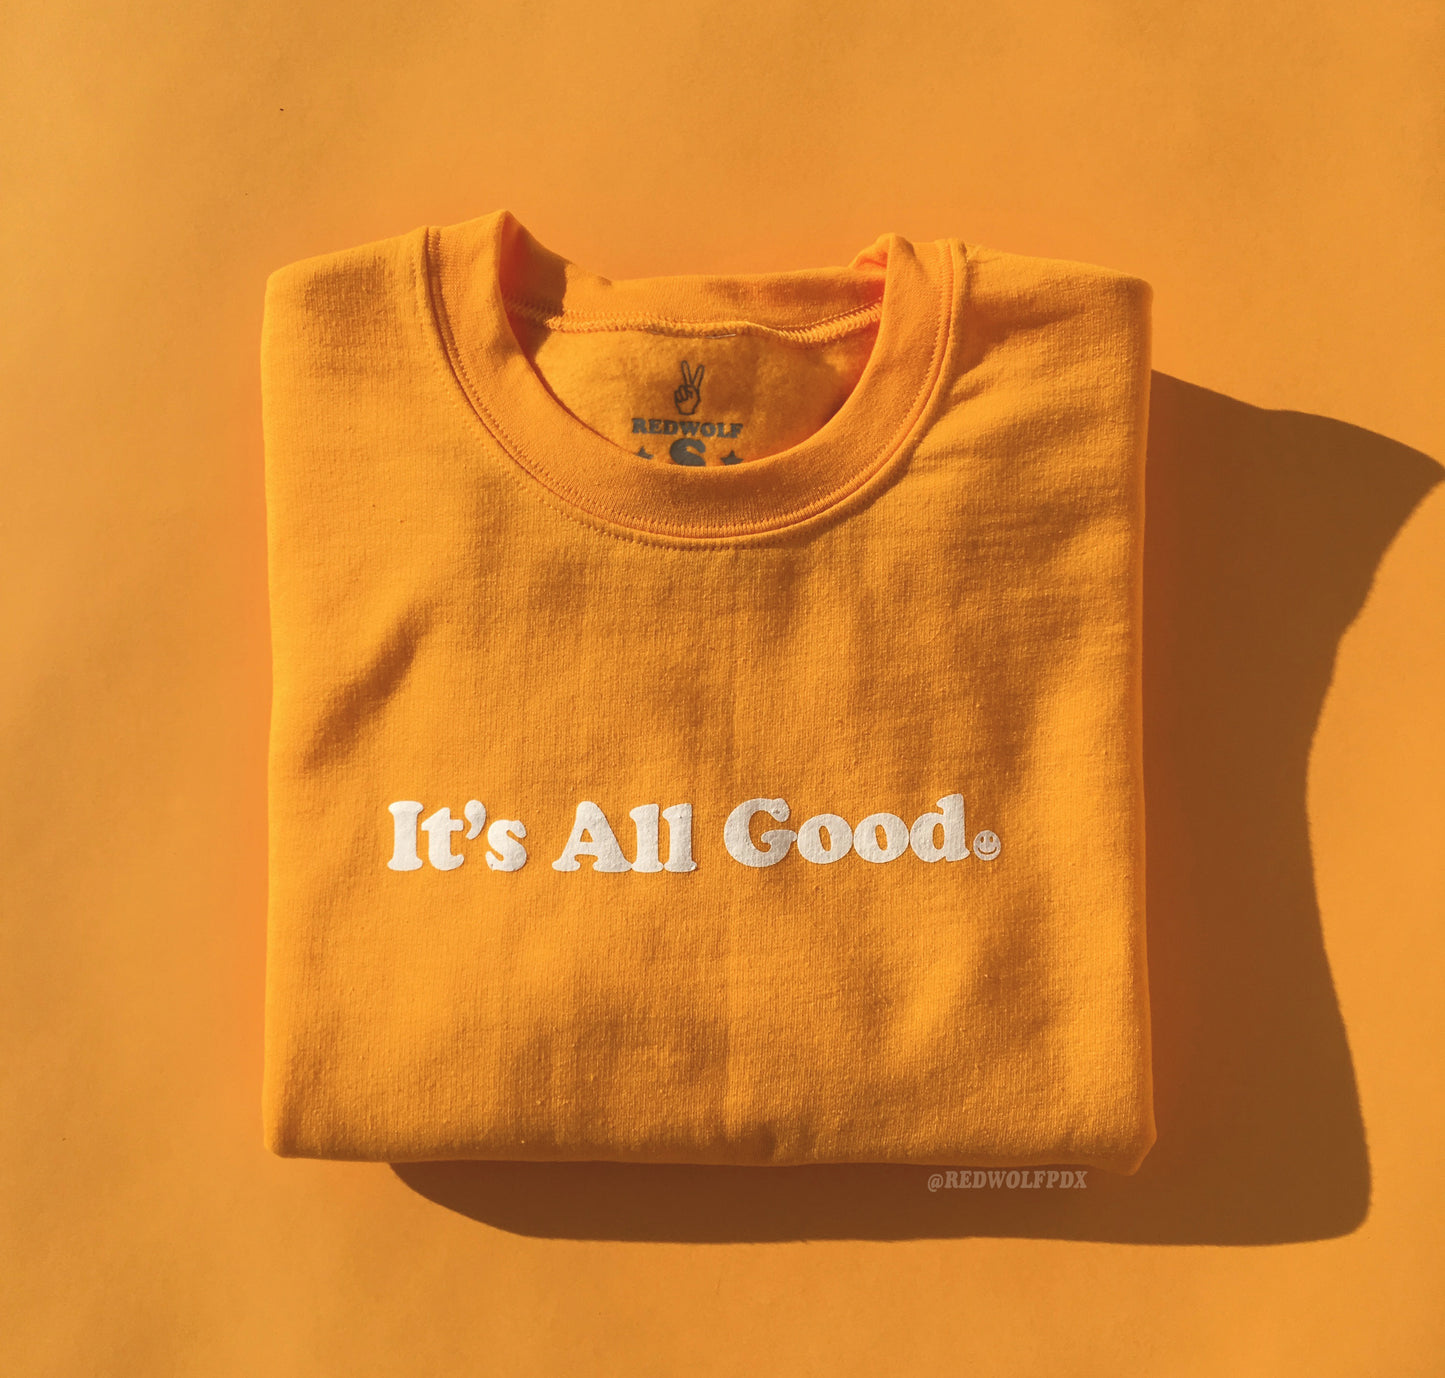  sweatshirt - IT'S ALL GOOD SWEATSHIRT - REDWOLF